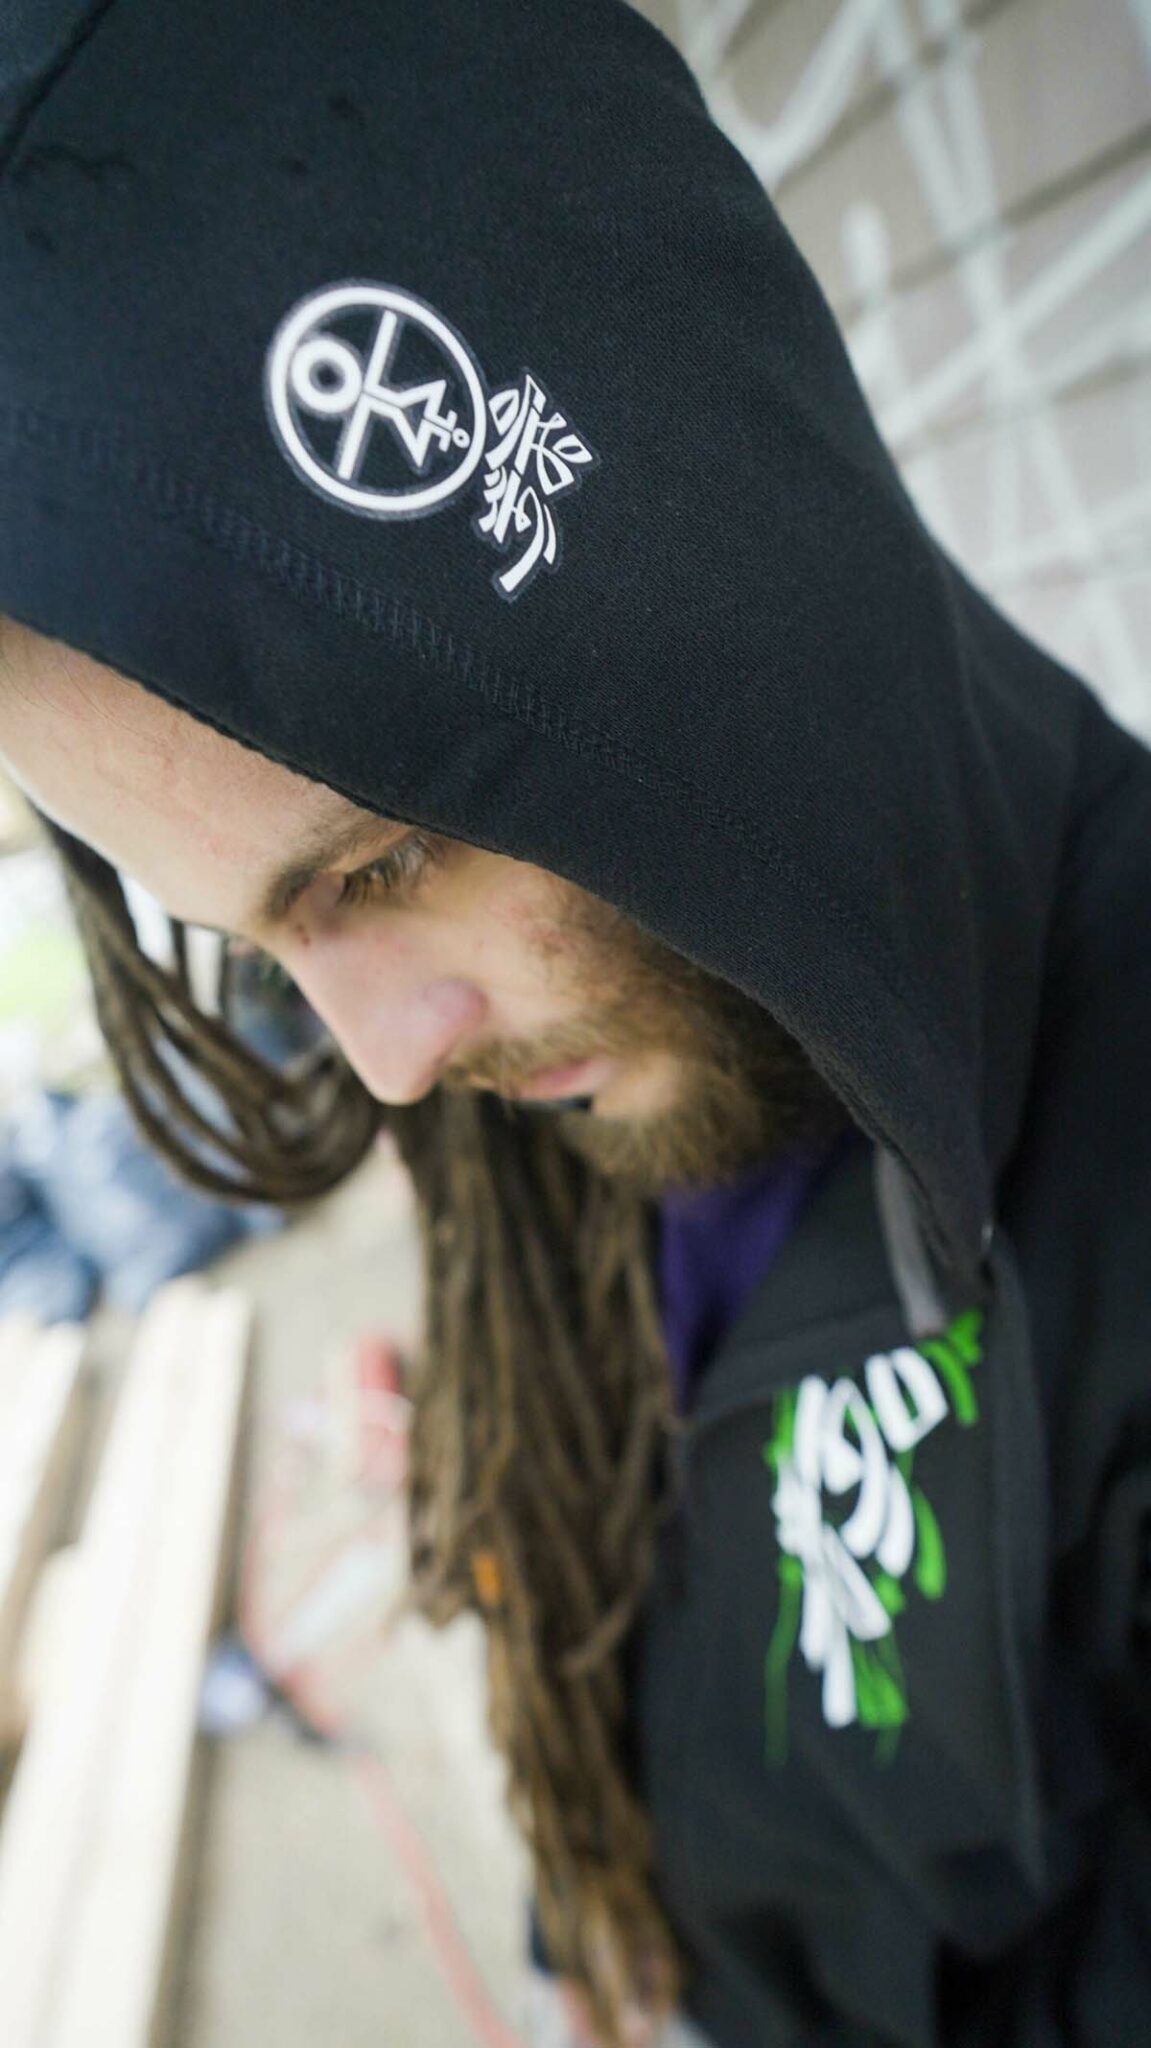 hoodie-hood-style-with-calligraffiti-art